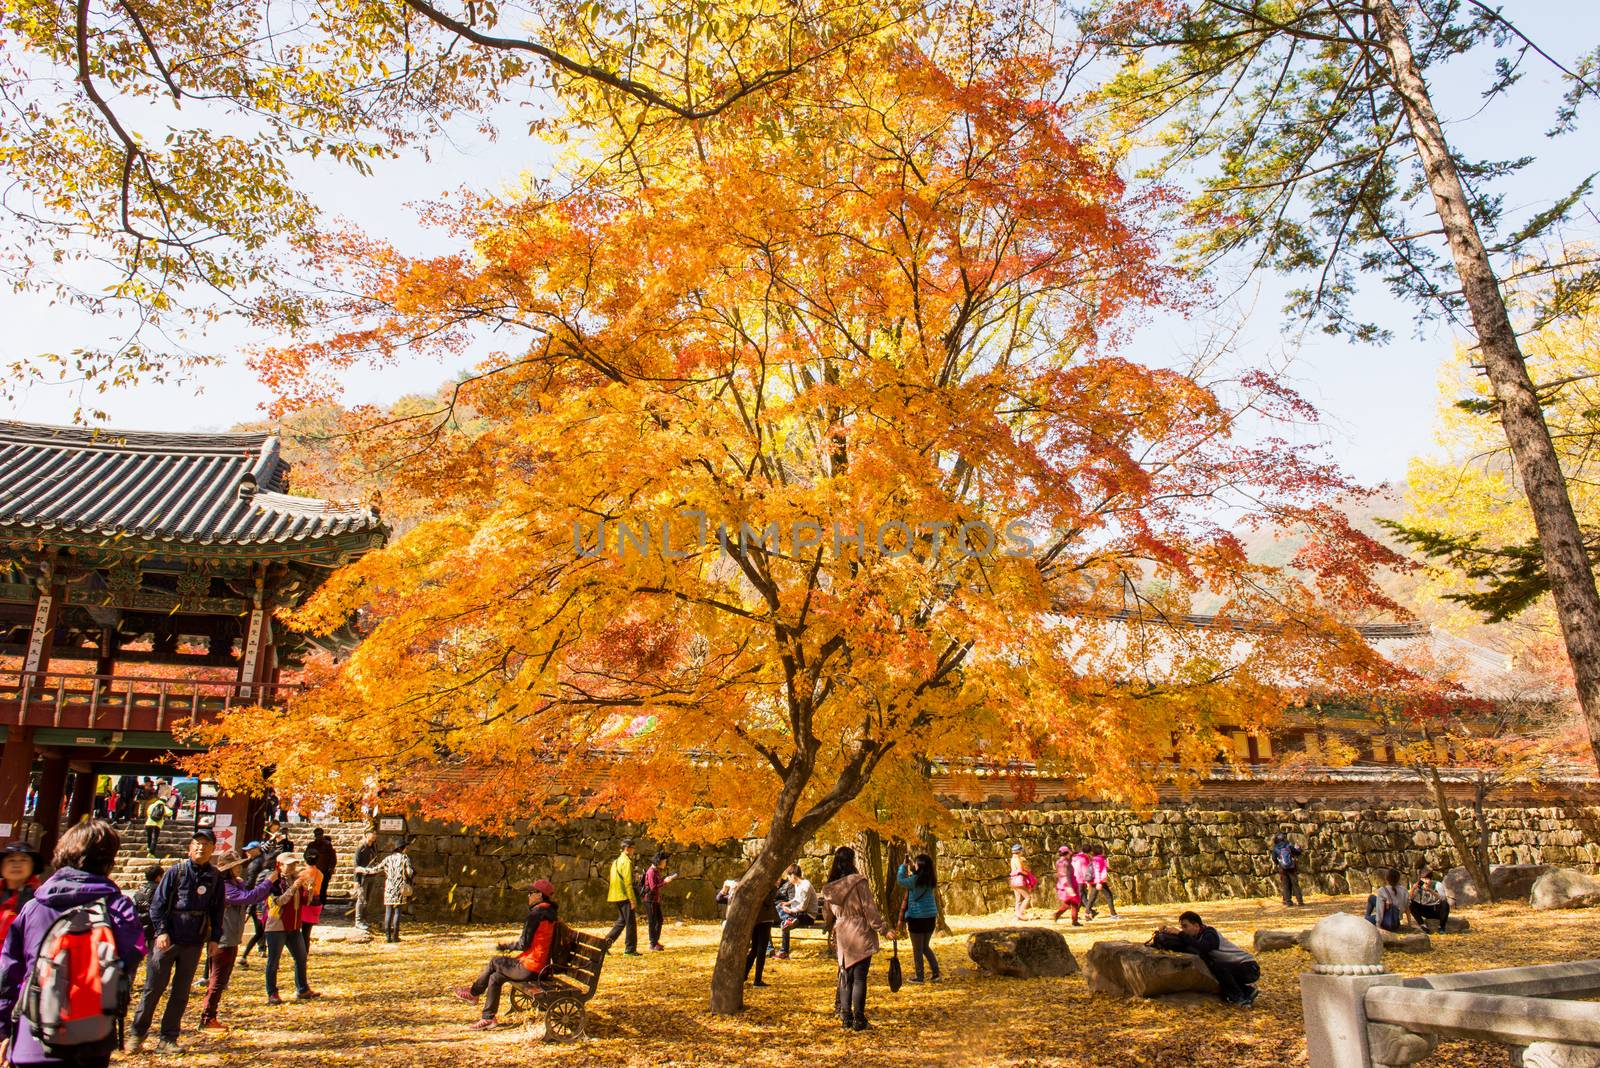 NAEJANGSAN,KOREA - NOVEMBER 30: Tourists taking photos of the beautiful scenery around Naejangsan,South Korea during autumn season on November 30, 2014.